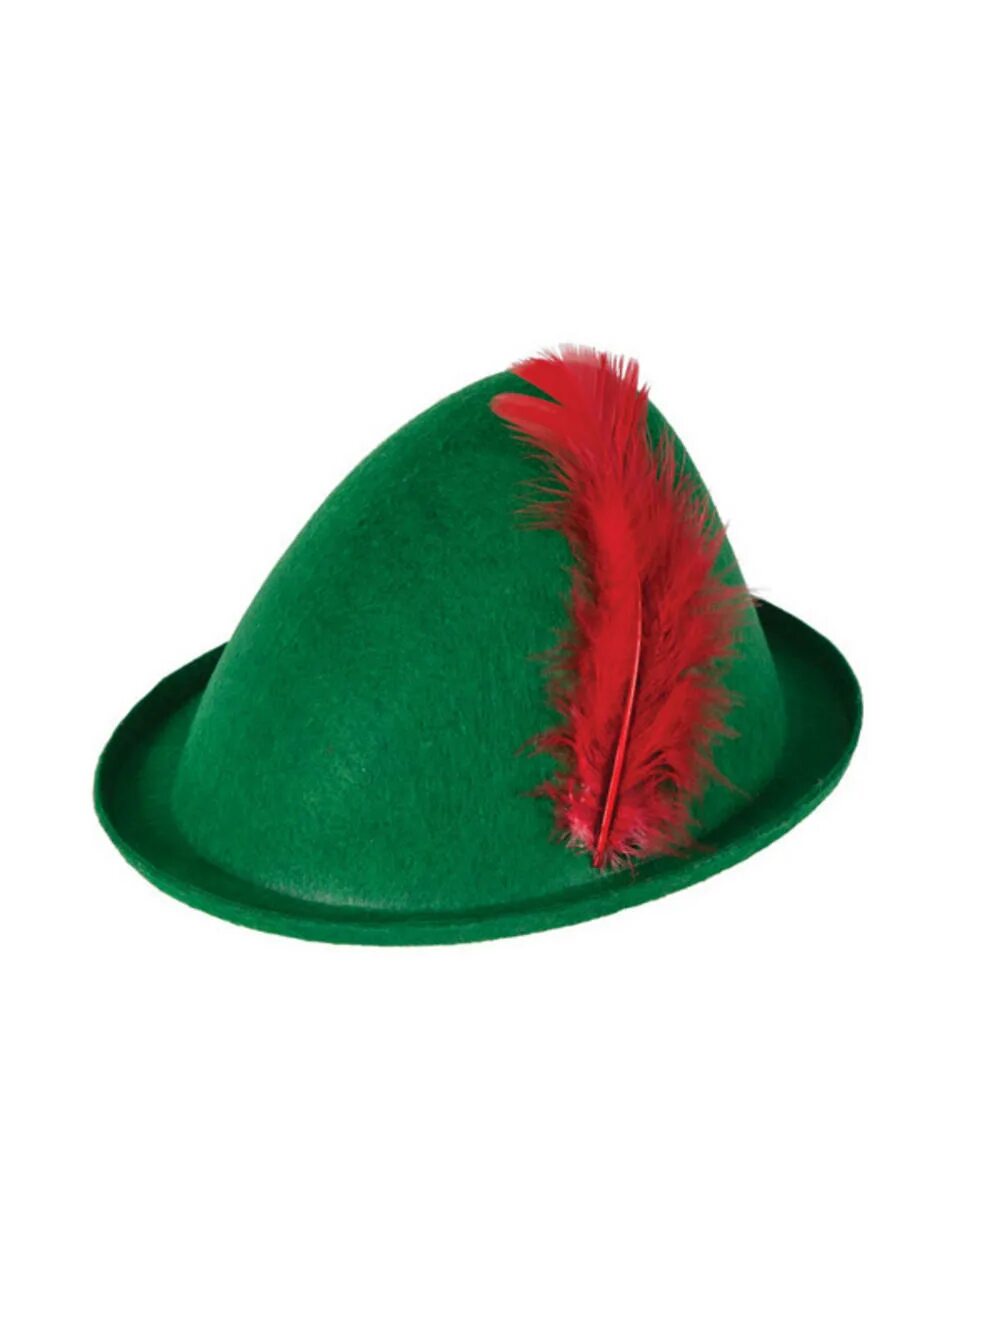 Шляпа Робин Гуда. Шляпа Robin Hood. Головной убор Робин Гуда. Питер Пэн шляпа. Peter hat